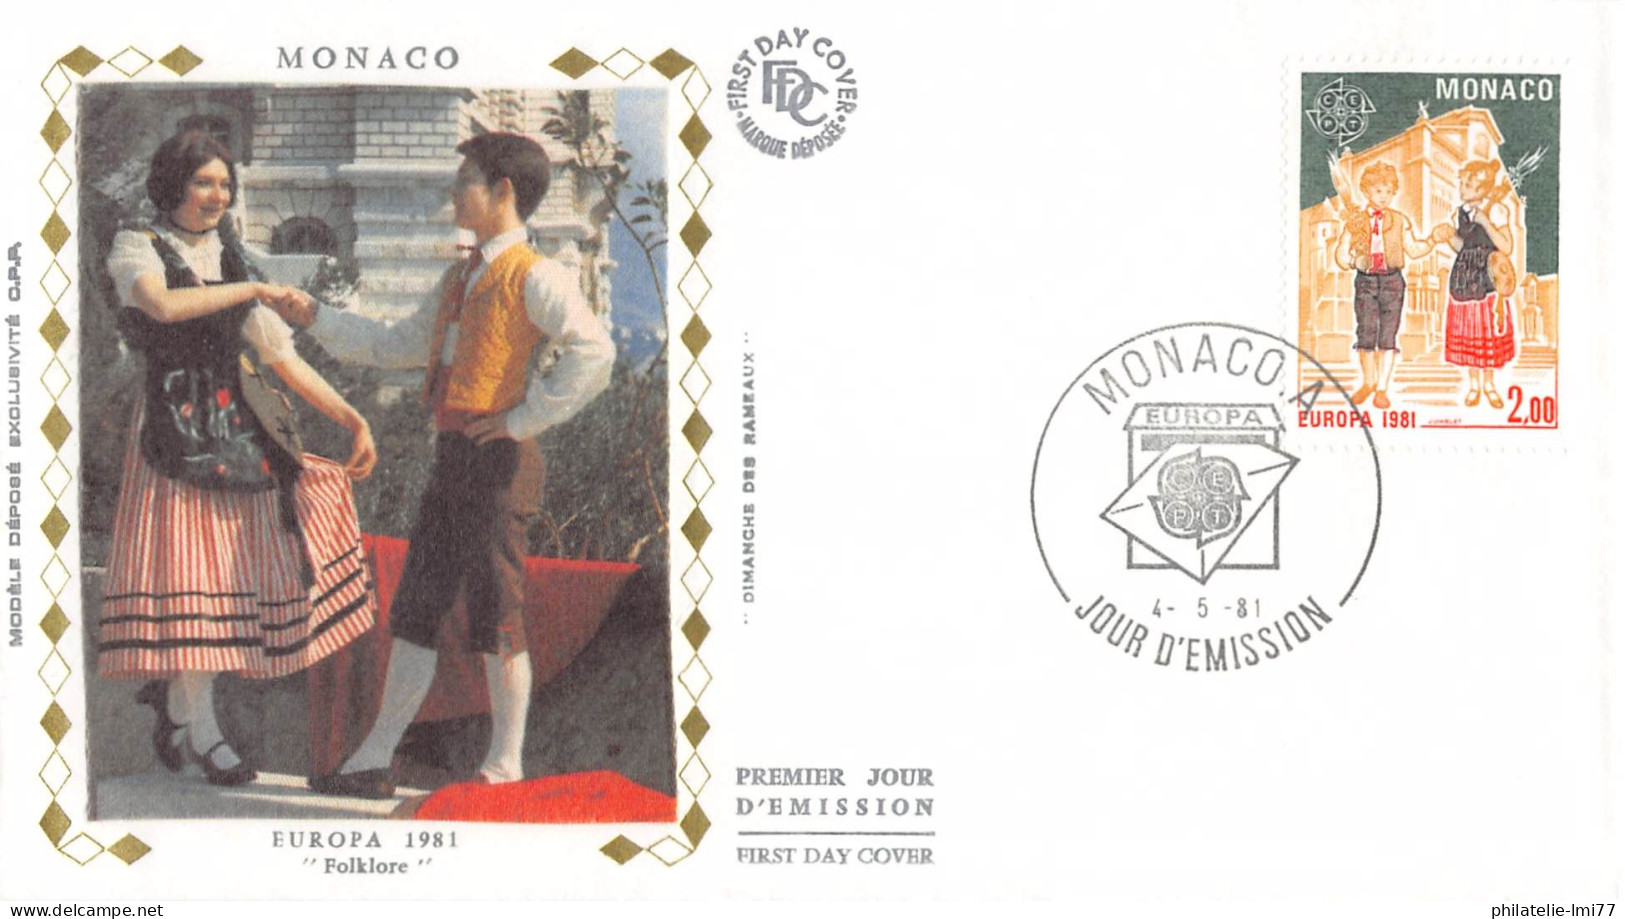 Monaco - FDC Europa 1981 - 1981